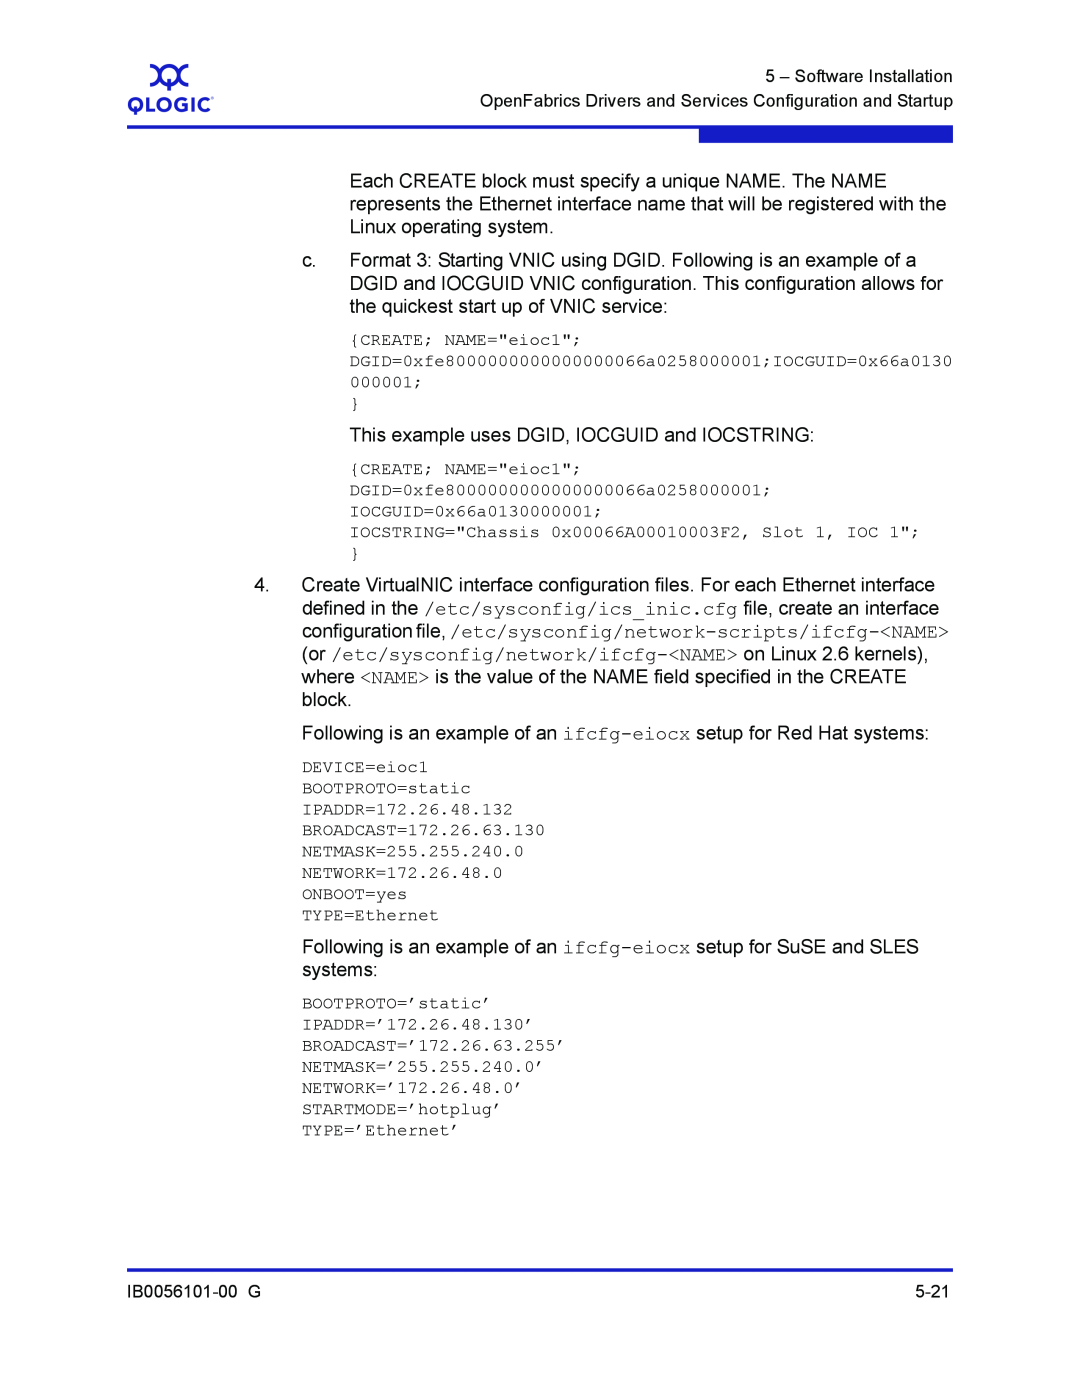 Q-Logic IB0056101-00 G manual This example uses DGID, IOCGUID and IOCSTRING 